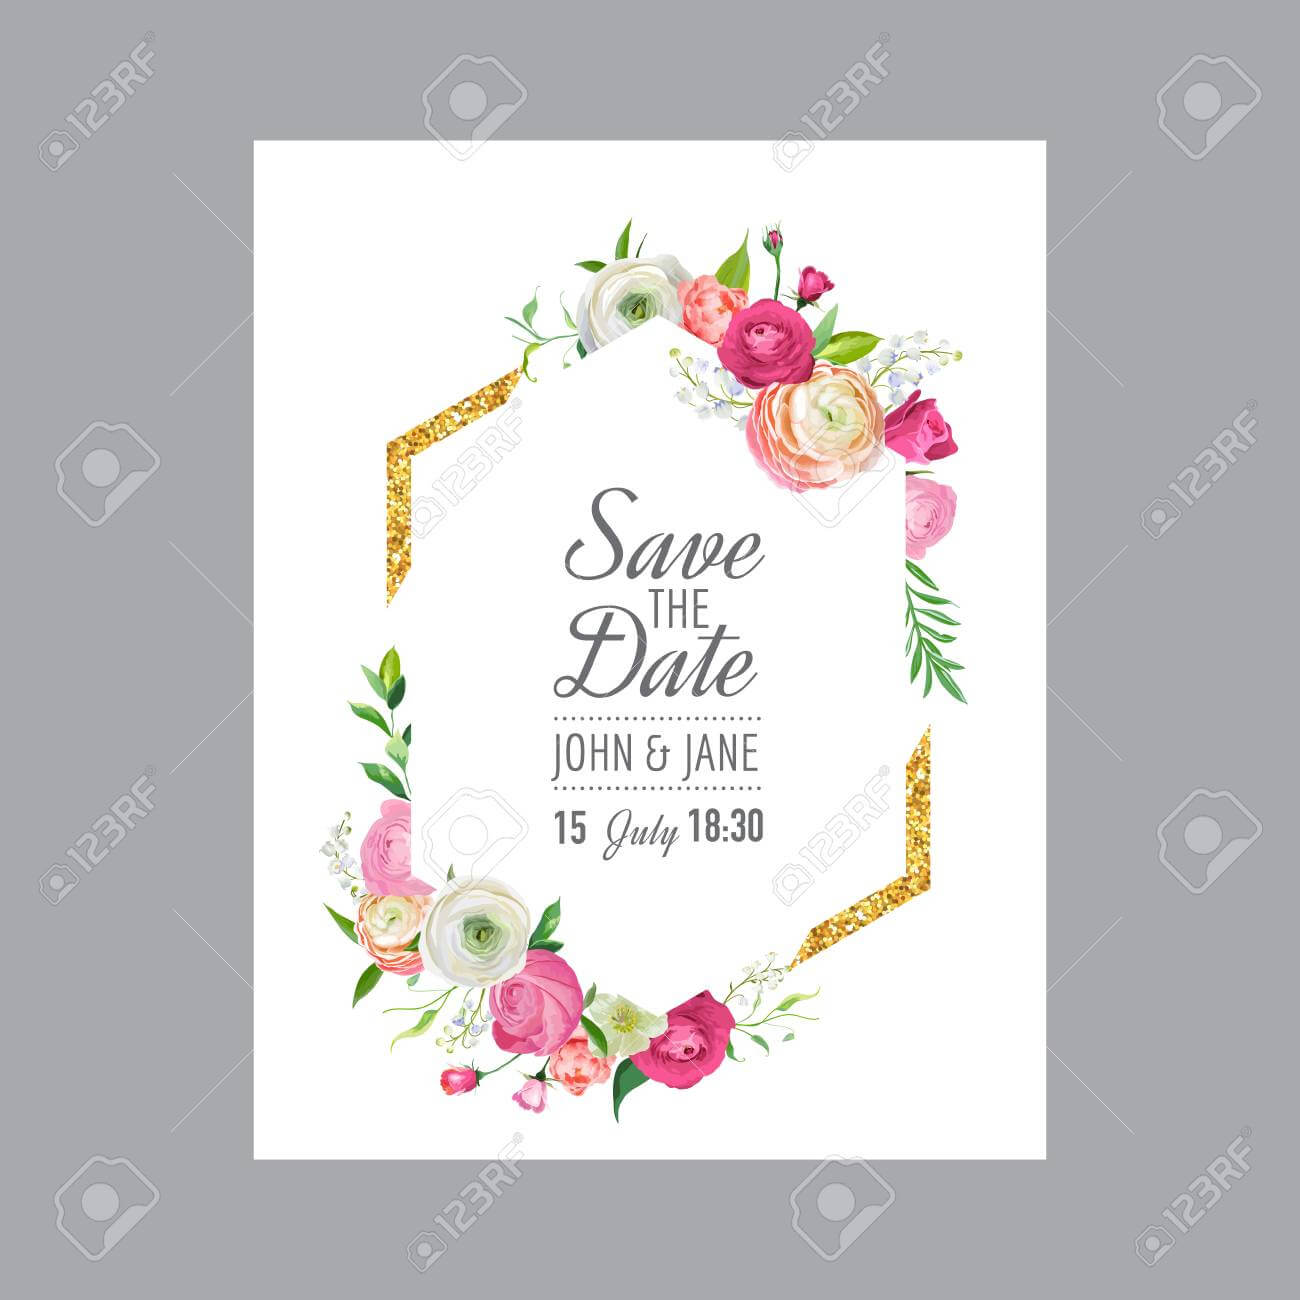 Save The Date Wedding Templates - Papele.alimentacionsegura Inside Save The Date Cards Templates